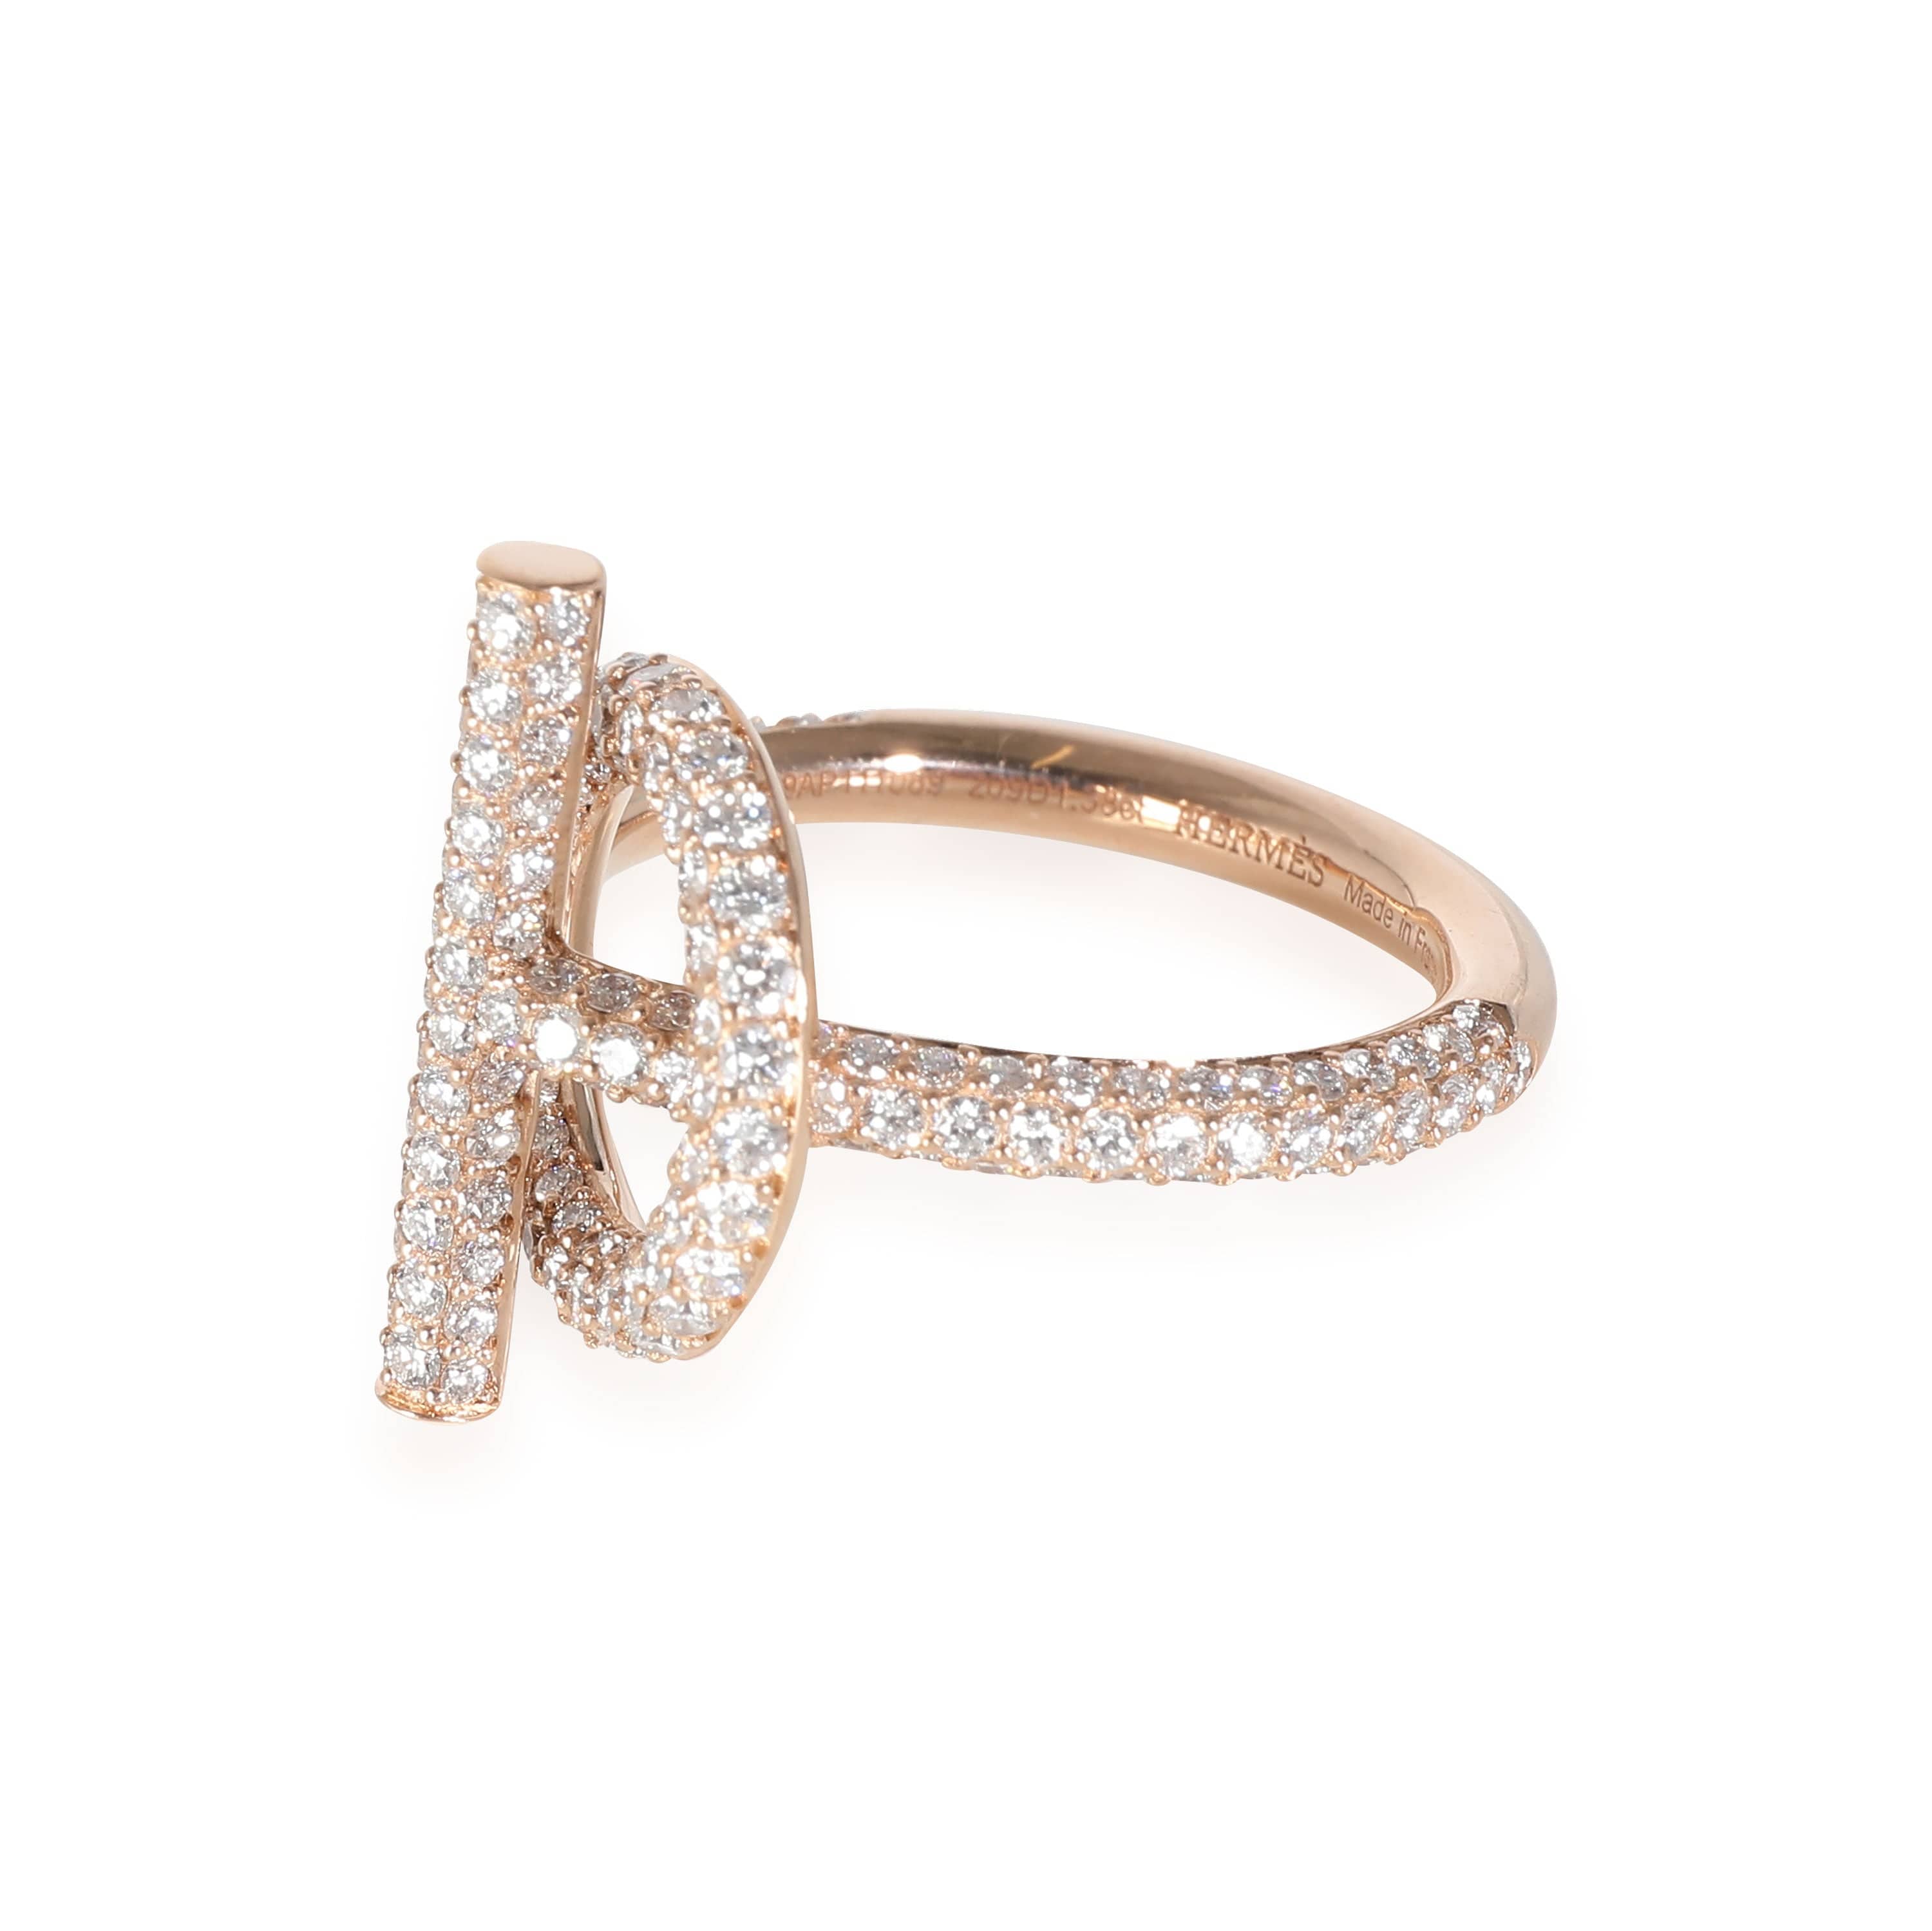 Hermès Hermes Echappee Ring in 18k Rose Gold 1.38 CTW